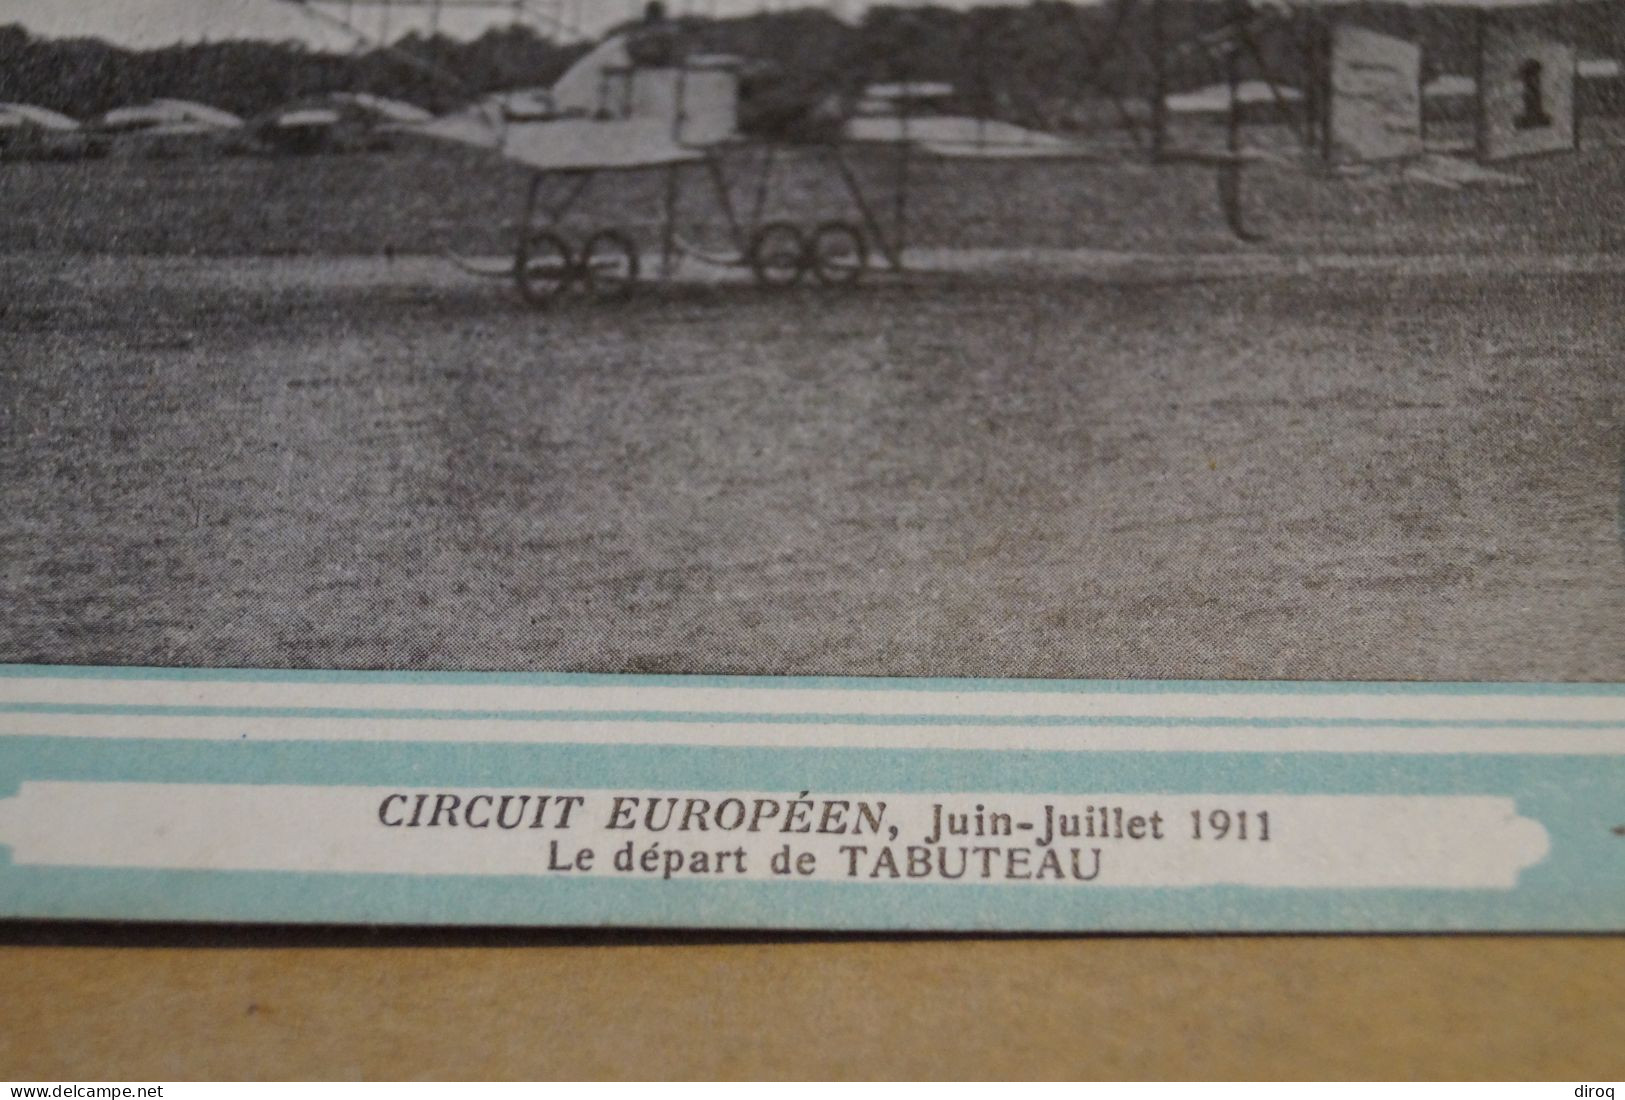 CIRCUIT EUROPEEN DE JUIN - JUILLET 1911,Biplan, Bristol,belle Carte Ancienne - Meetings